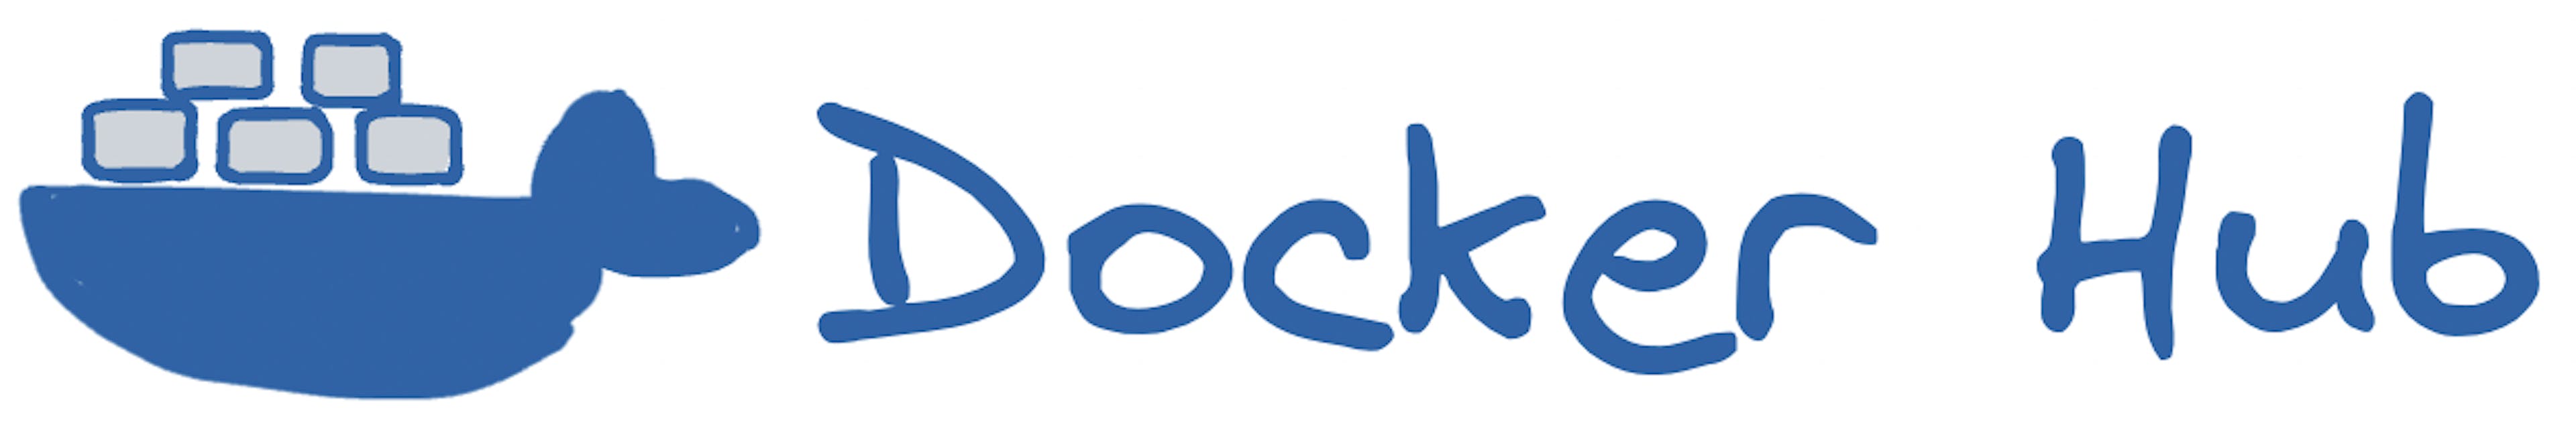 A fascimile of the Docker logo.